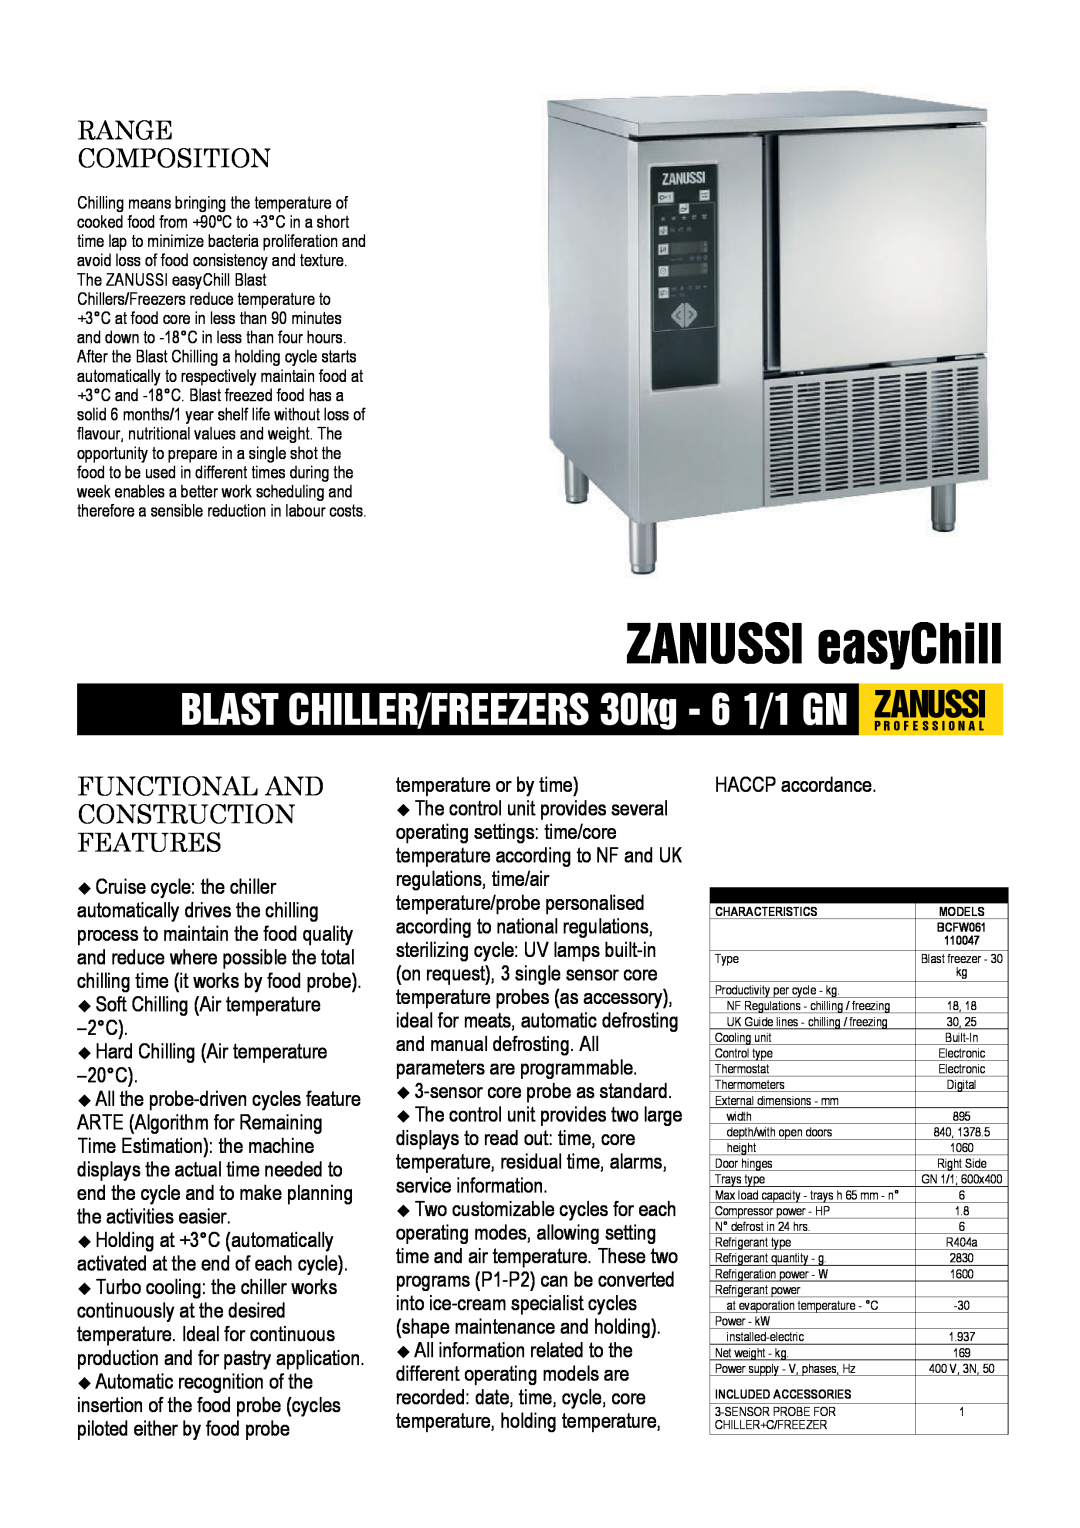 Electrolux BCFW061 dimensions ZANUSSI easyChill, BLAST CHILLER/FREEZERS 30kg - 6 1/1 GN ZANUSSIP R O F E S S I O N A L 